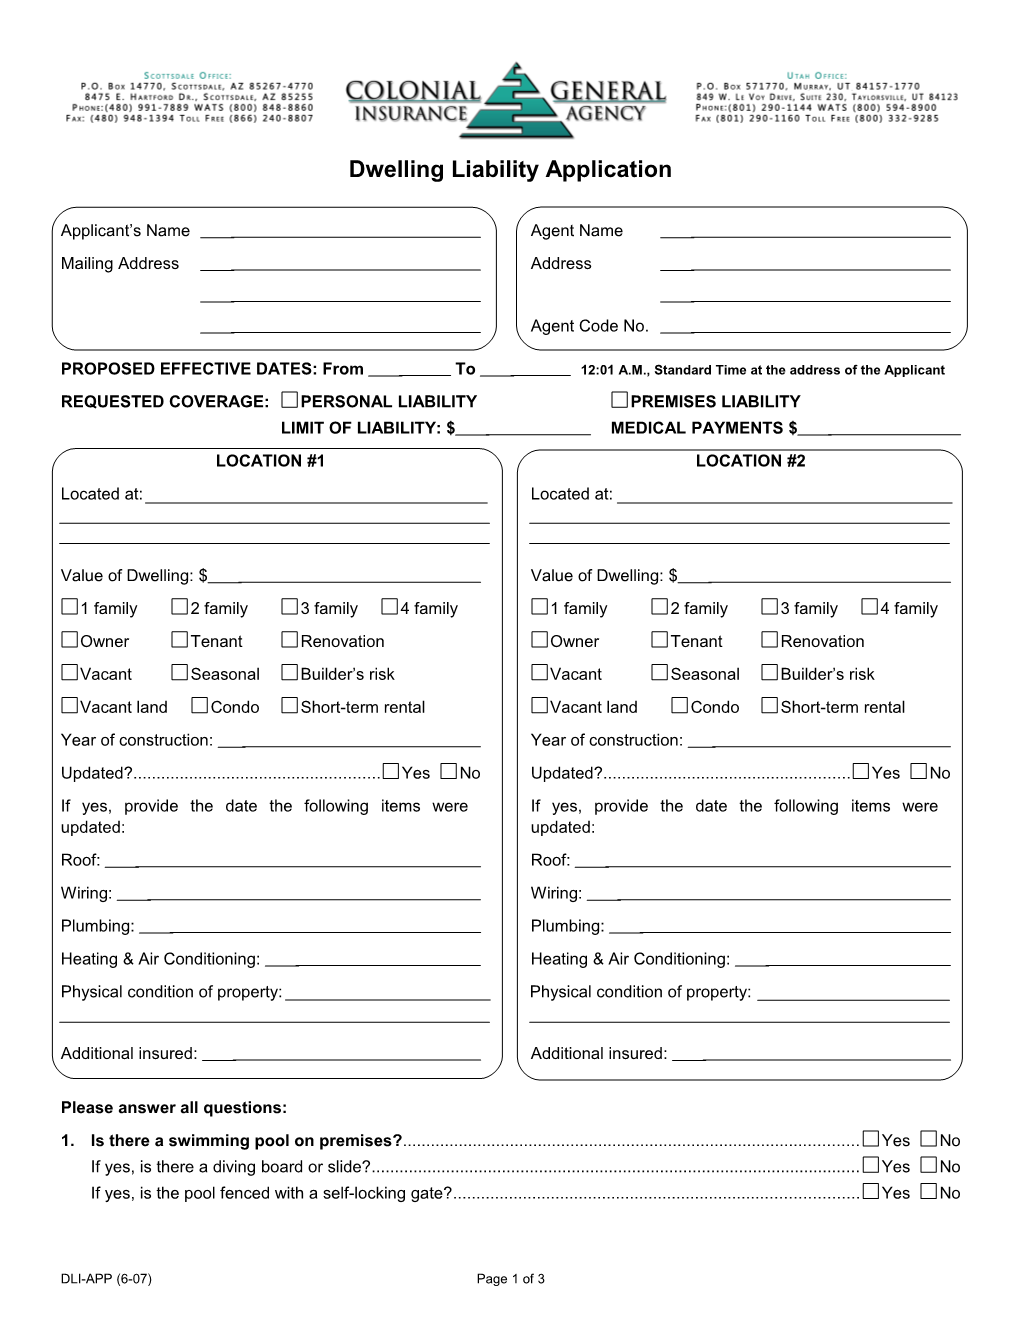 Dwelling Liability Application